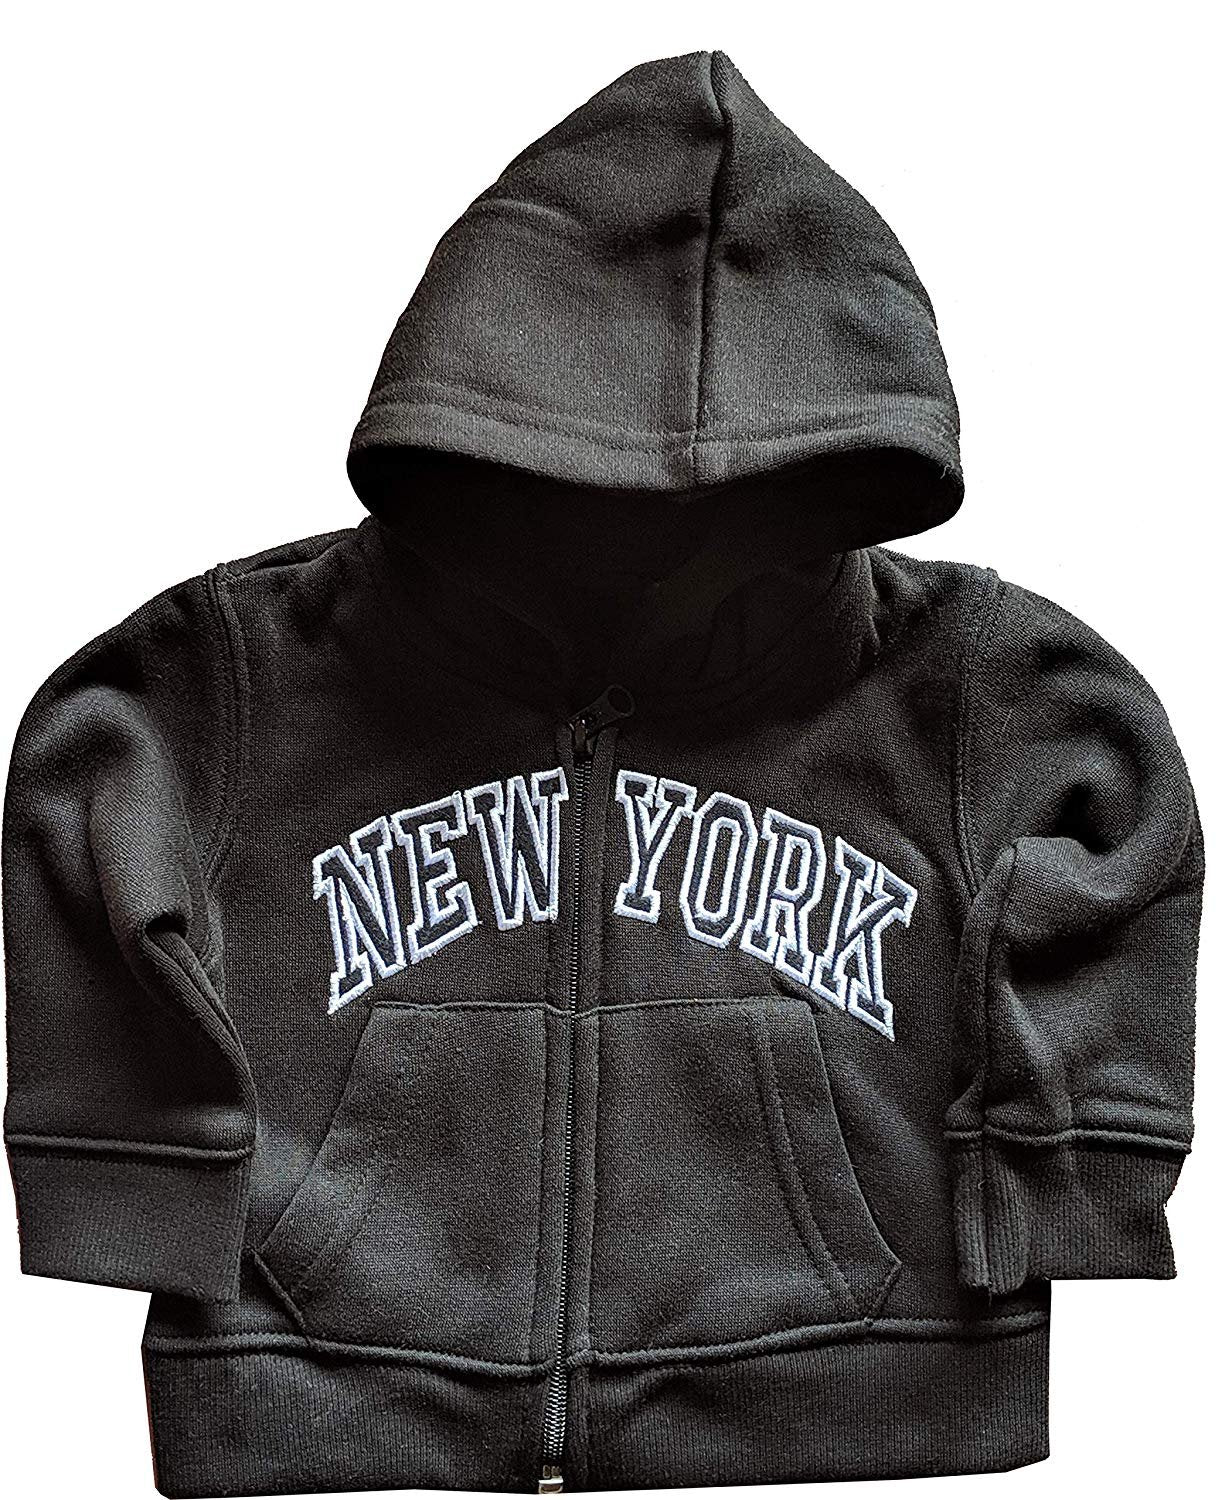 New York City Säuglingsbaby Hoodies Sweatshirt NYC Geschenke mit Reißverschluss